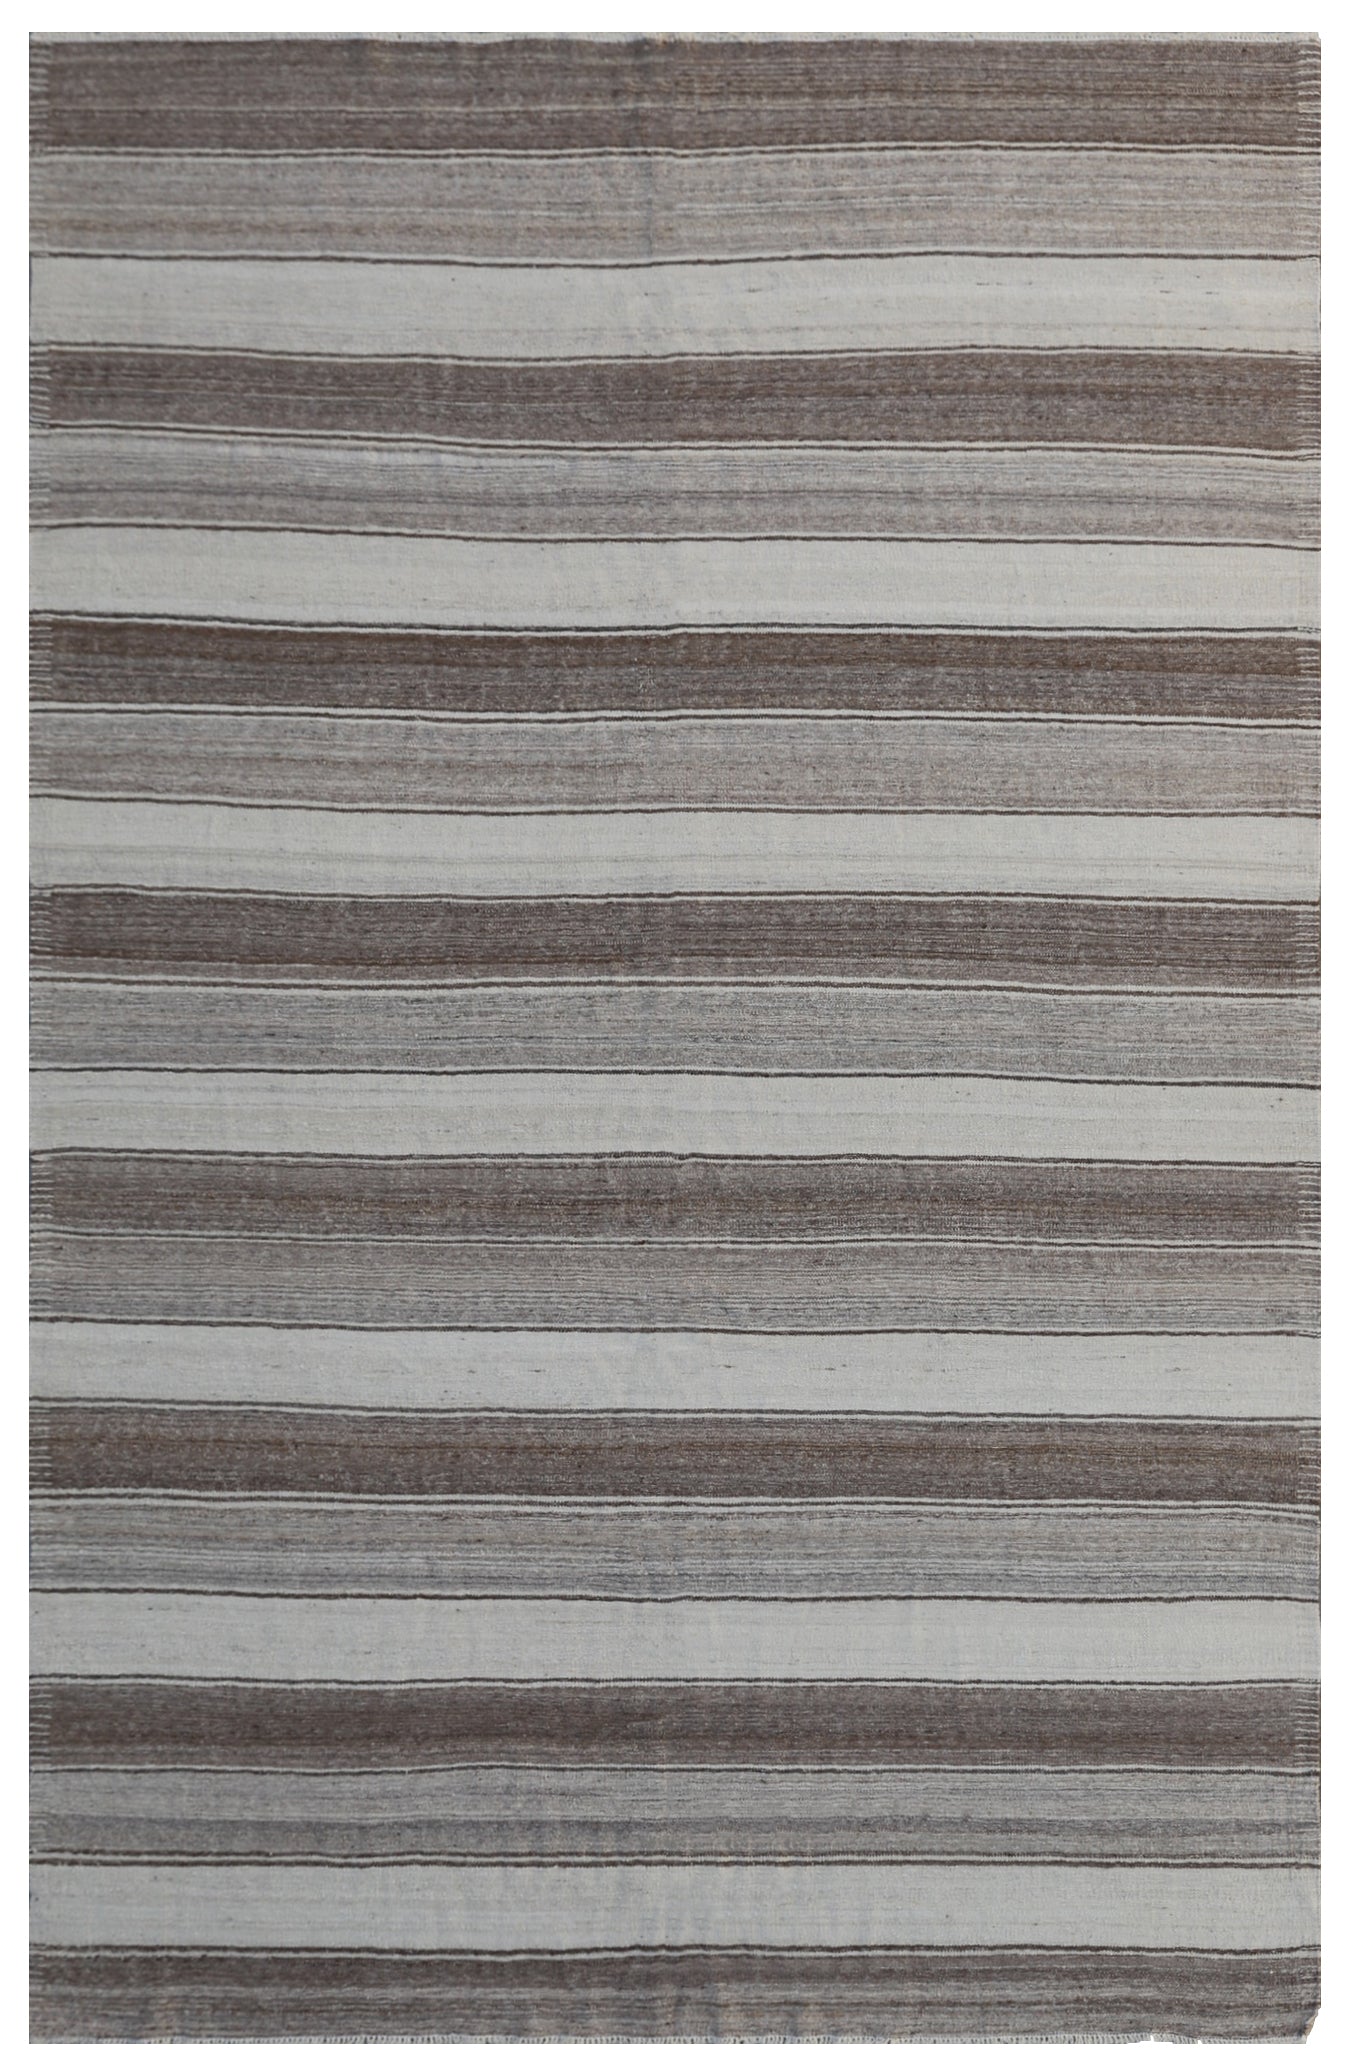 9.05 x  6.03 Hand Woven Earth Tone Stripe Ariana Kilim Rug